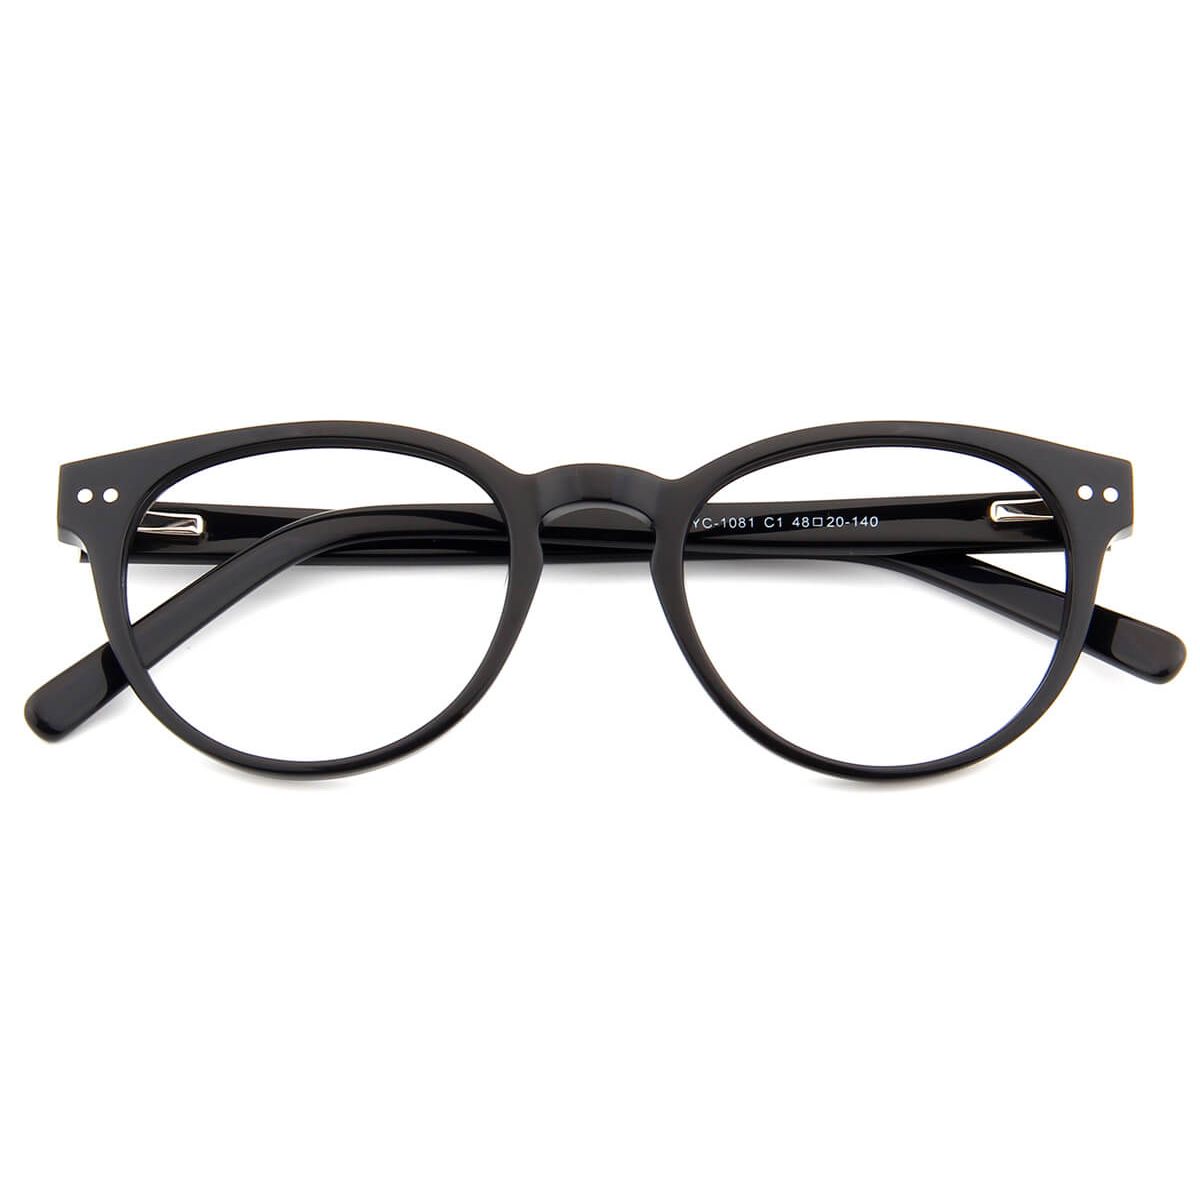 Yc 1081 Round Black Eyeglasses Frames Leoptique 5090